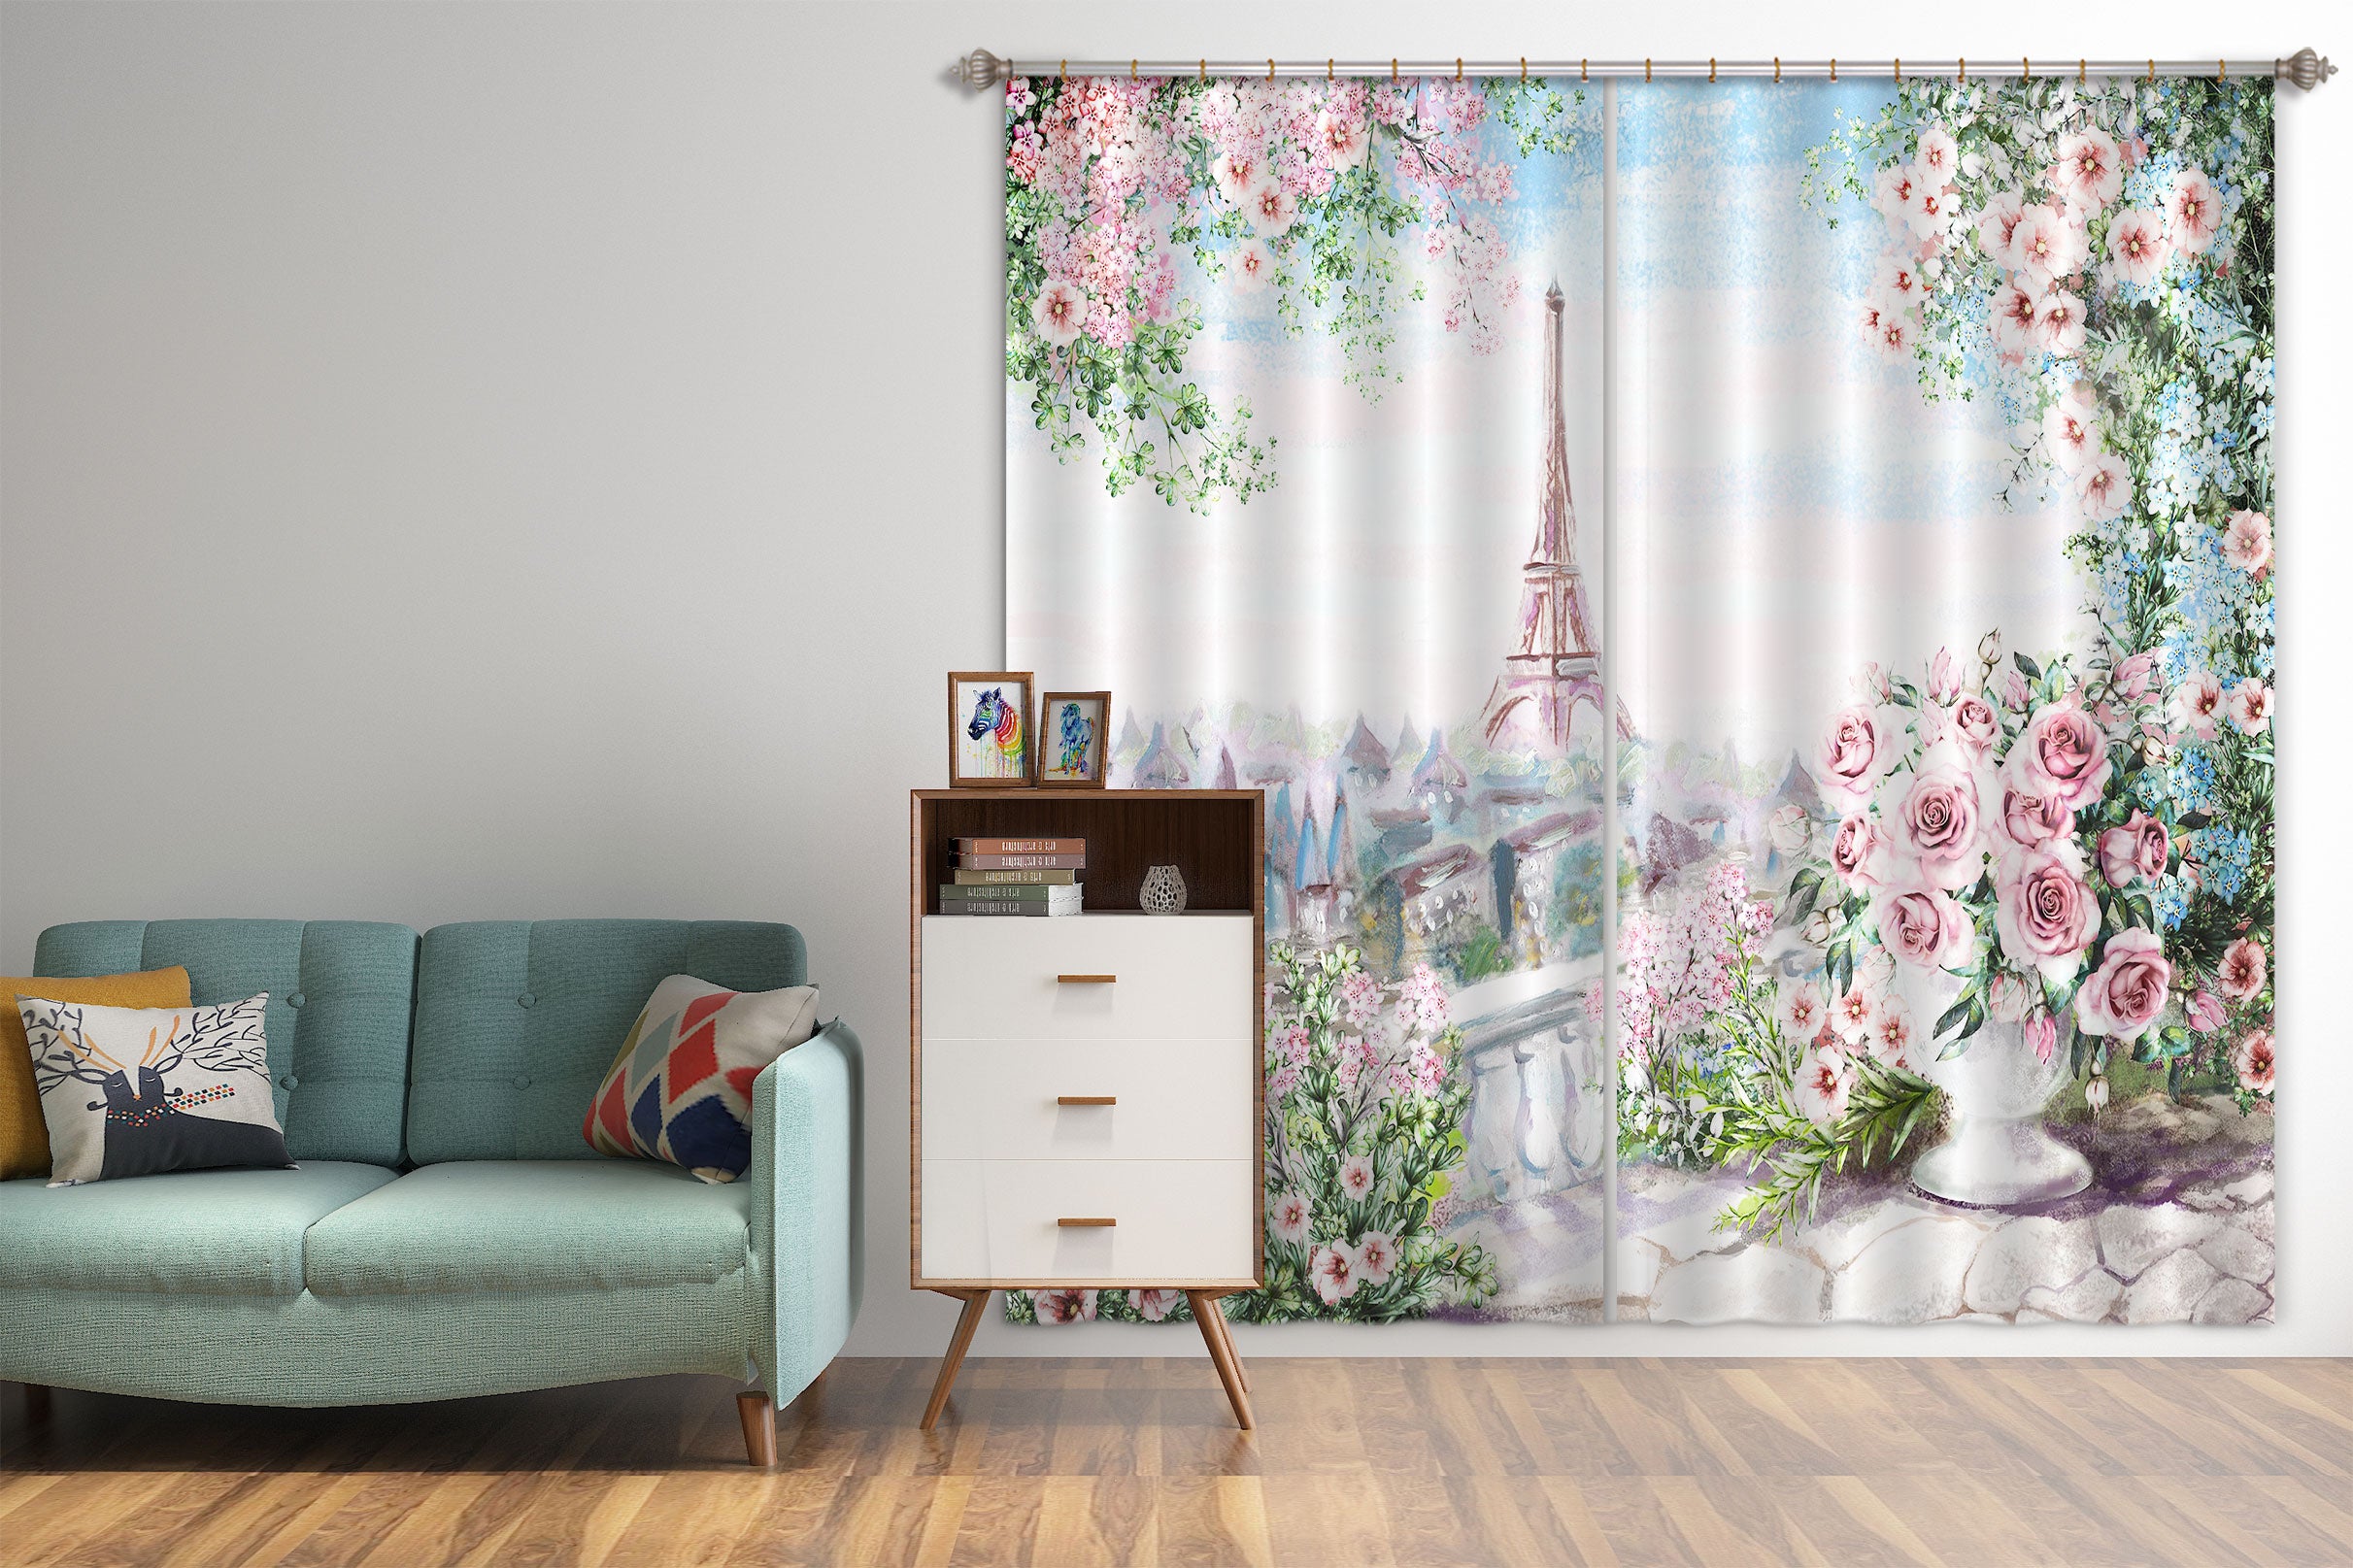 3D Rose Eiffel Tower 042 Curtains Drapes